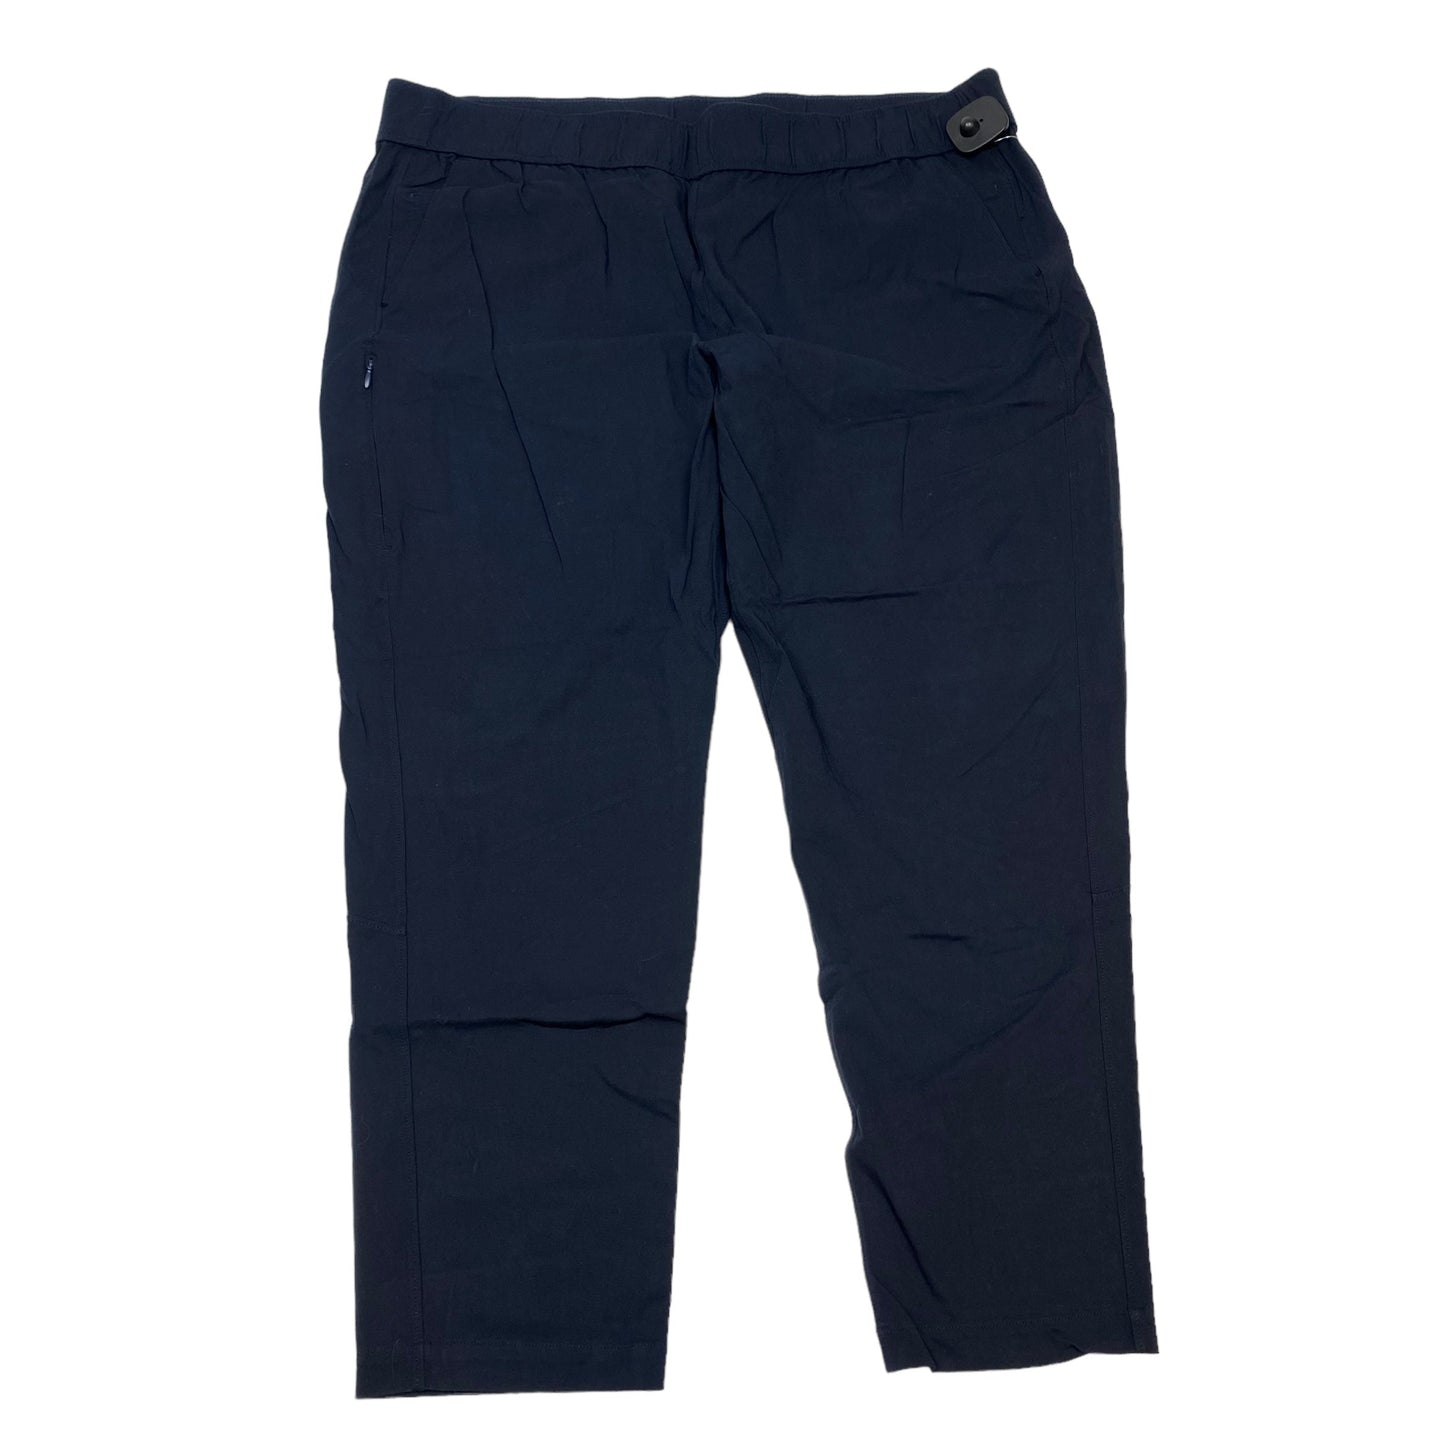 Navy Athletic Pants Alder, Size 4x